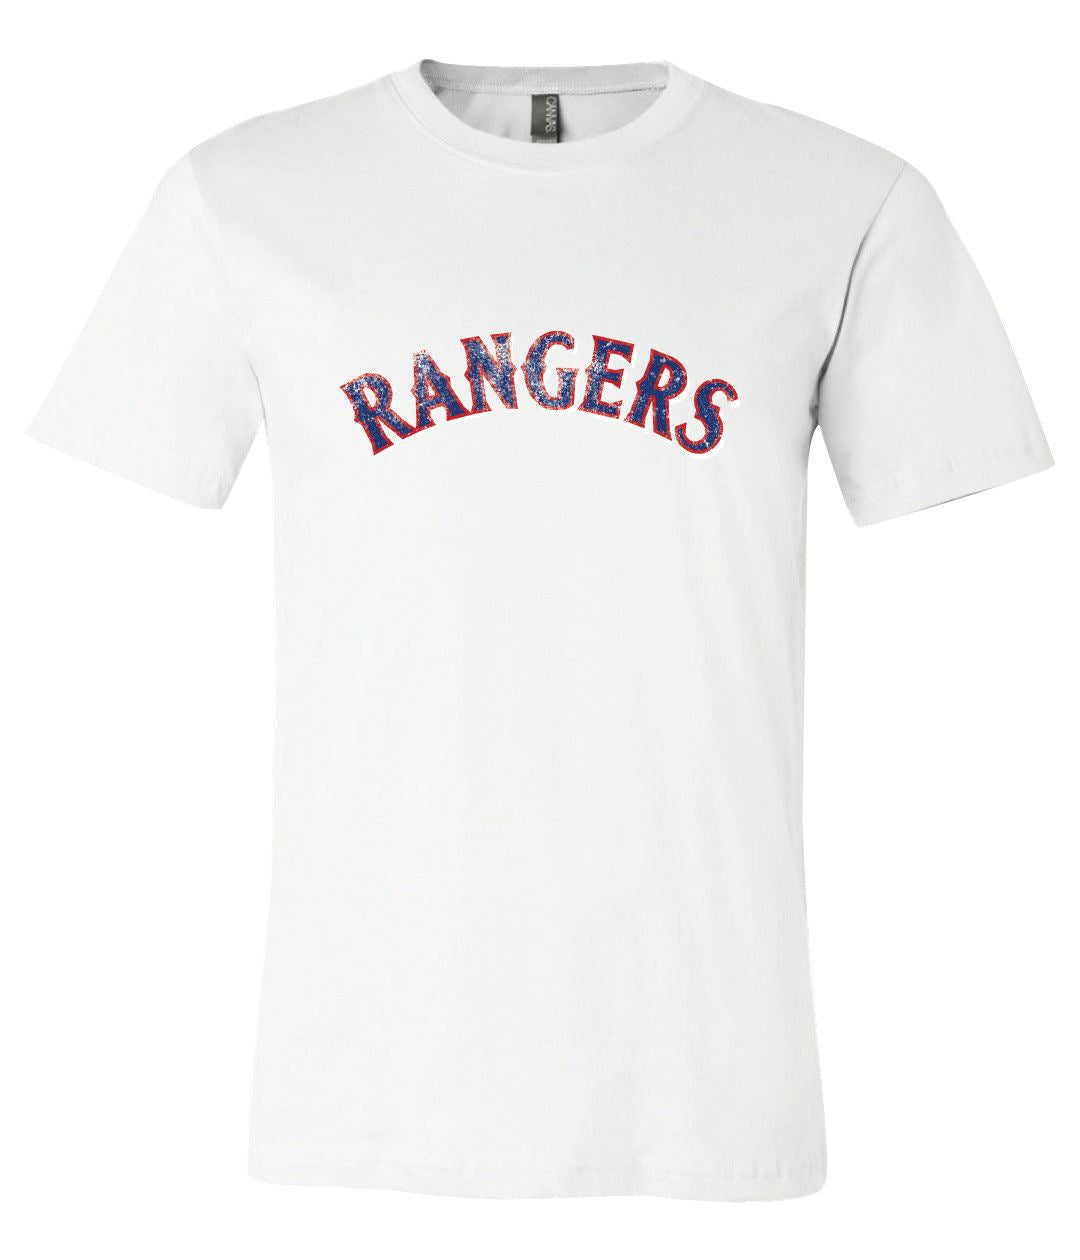 Texas Rangers Text logo Distressed Vintage logo T-shirt 6 Sizes S-3XL!